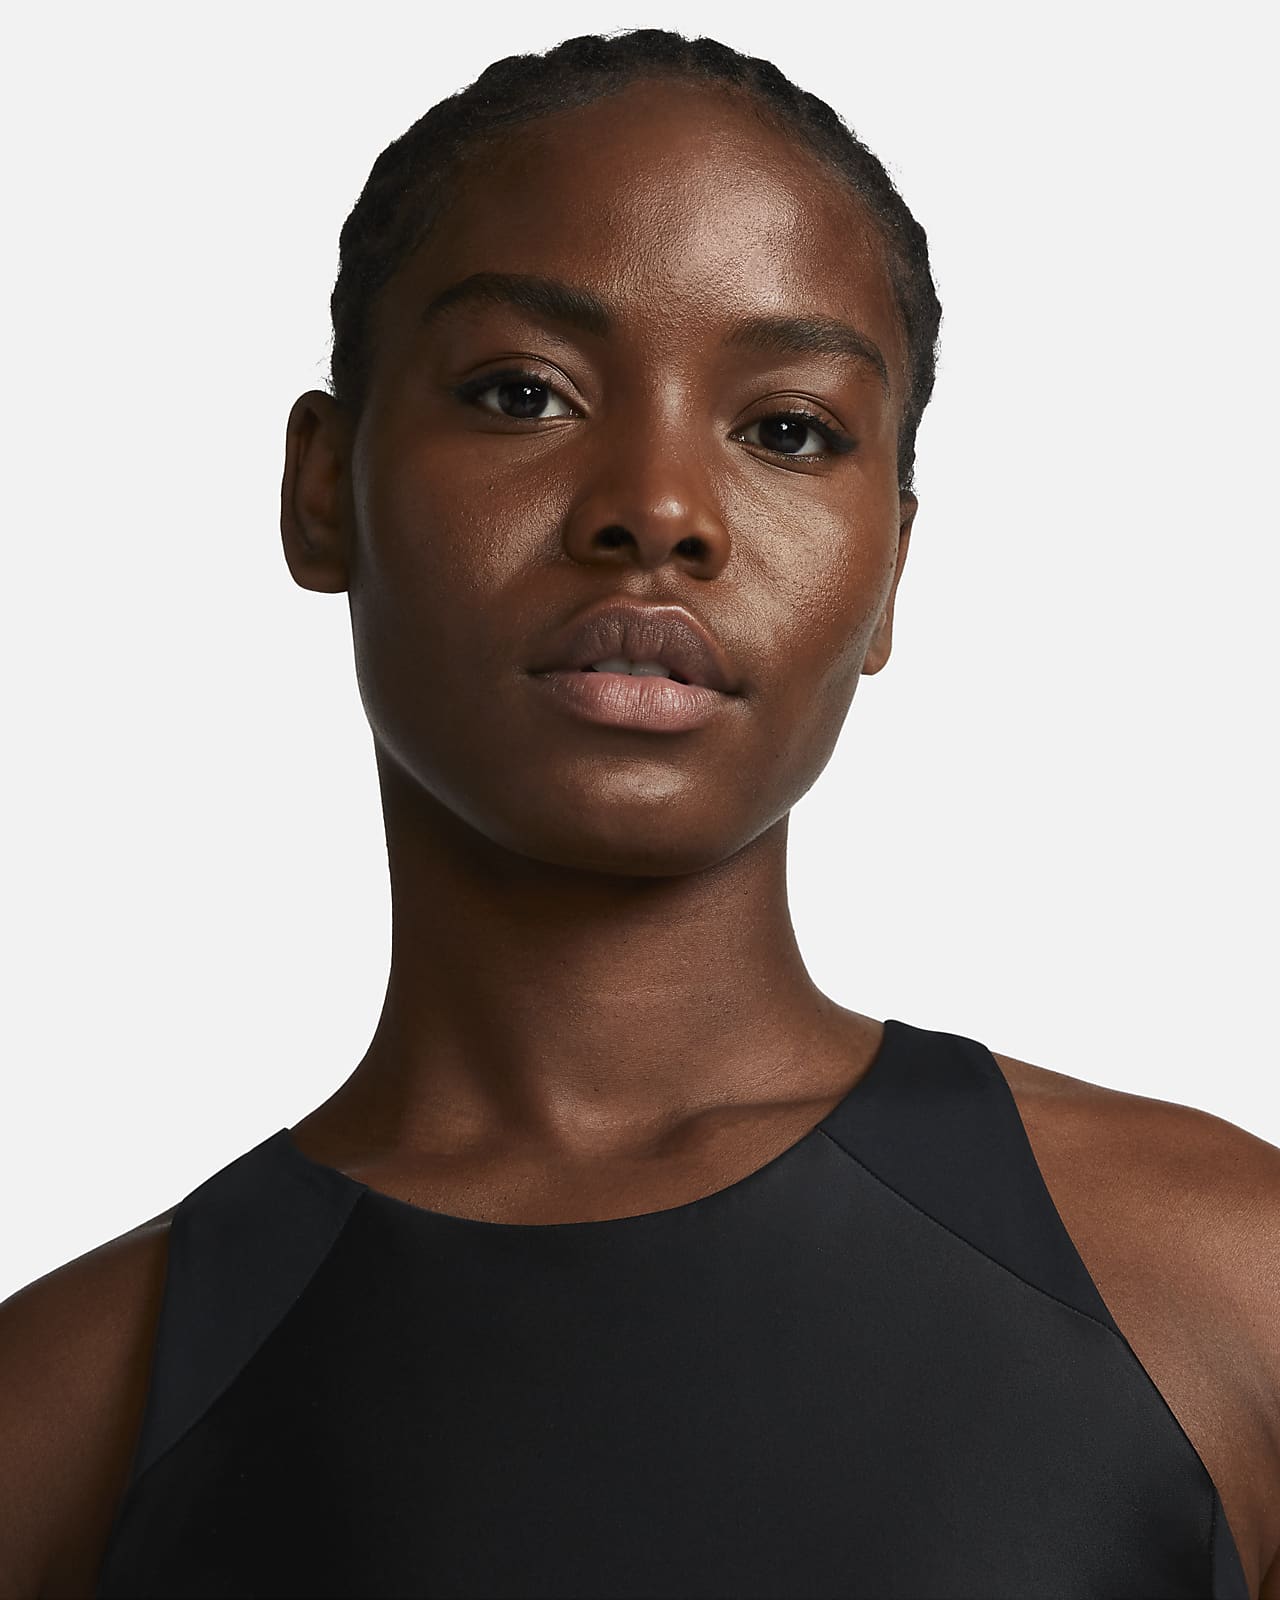 Nike Pro Dri-FIT Women's Crop Tank Top